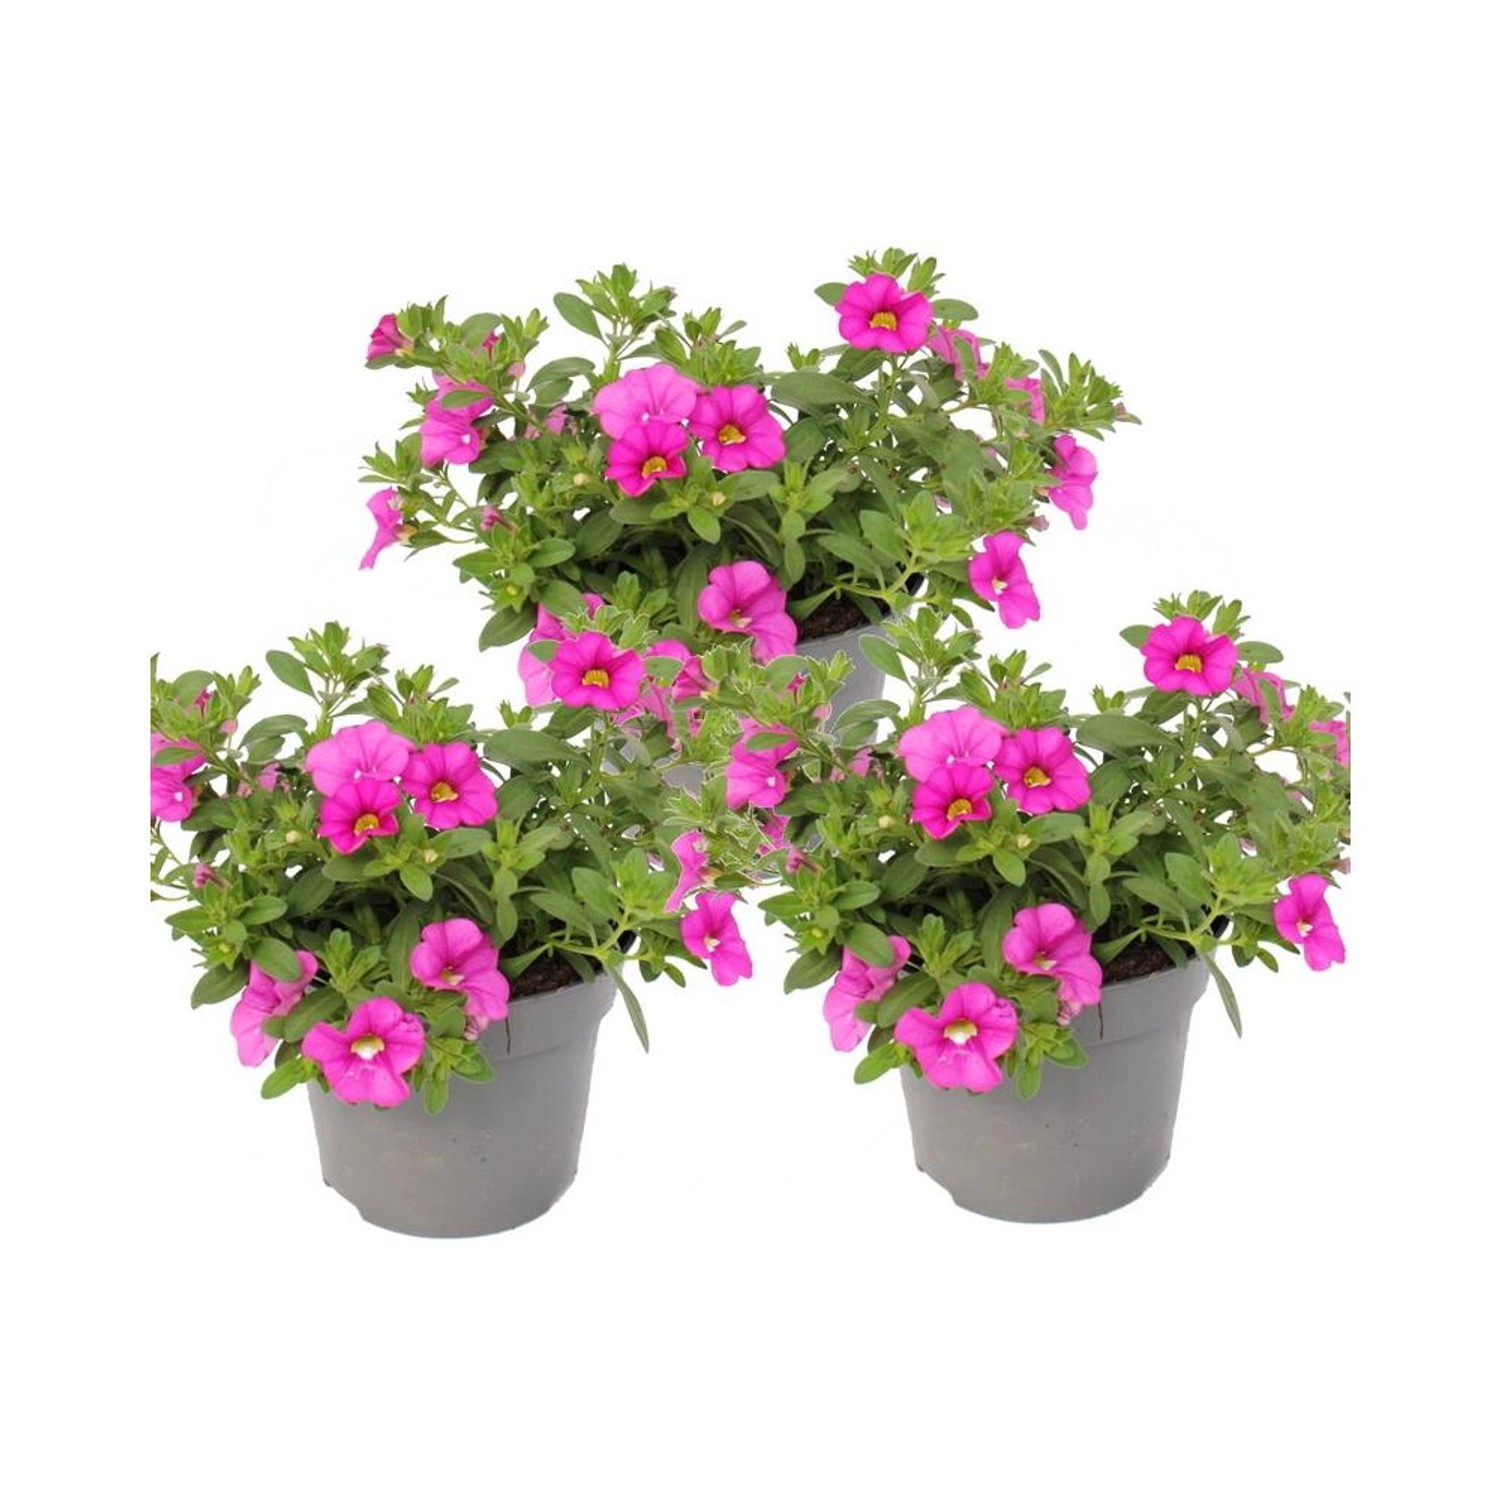 Exotenherz Zauberglöckchen Minihängepetunie Calibrachoa 12cm Topf Set mit 3 Pflanzen Rosa